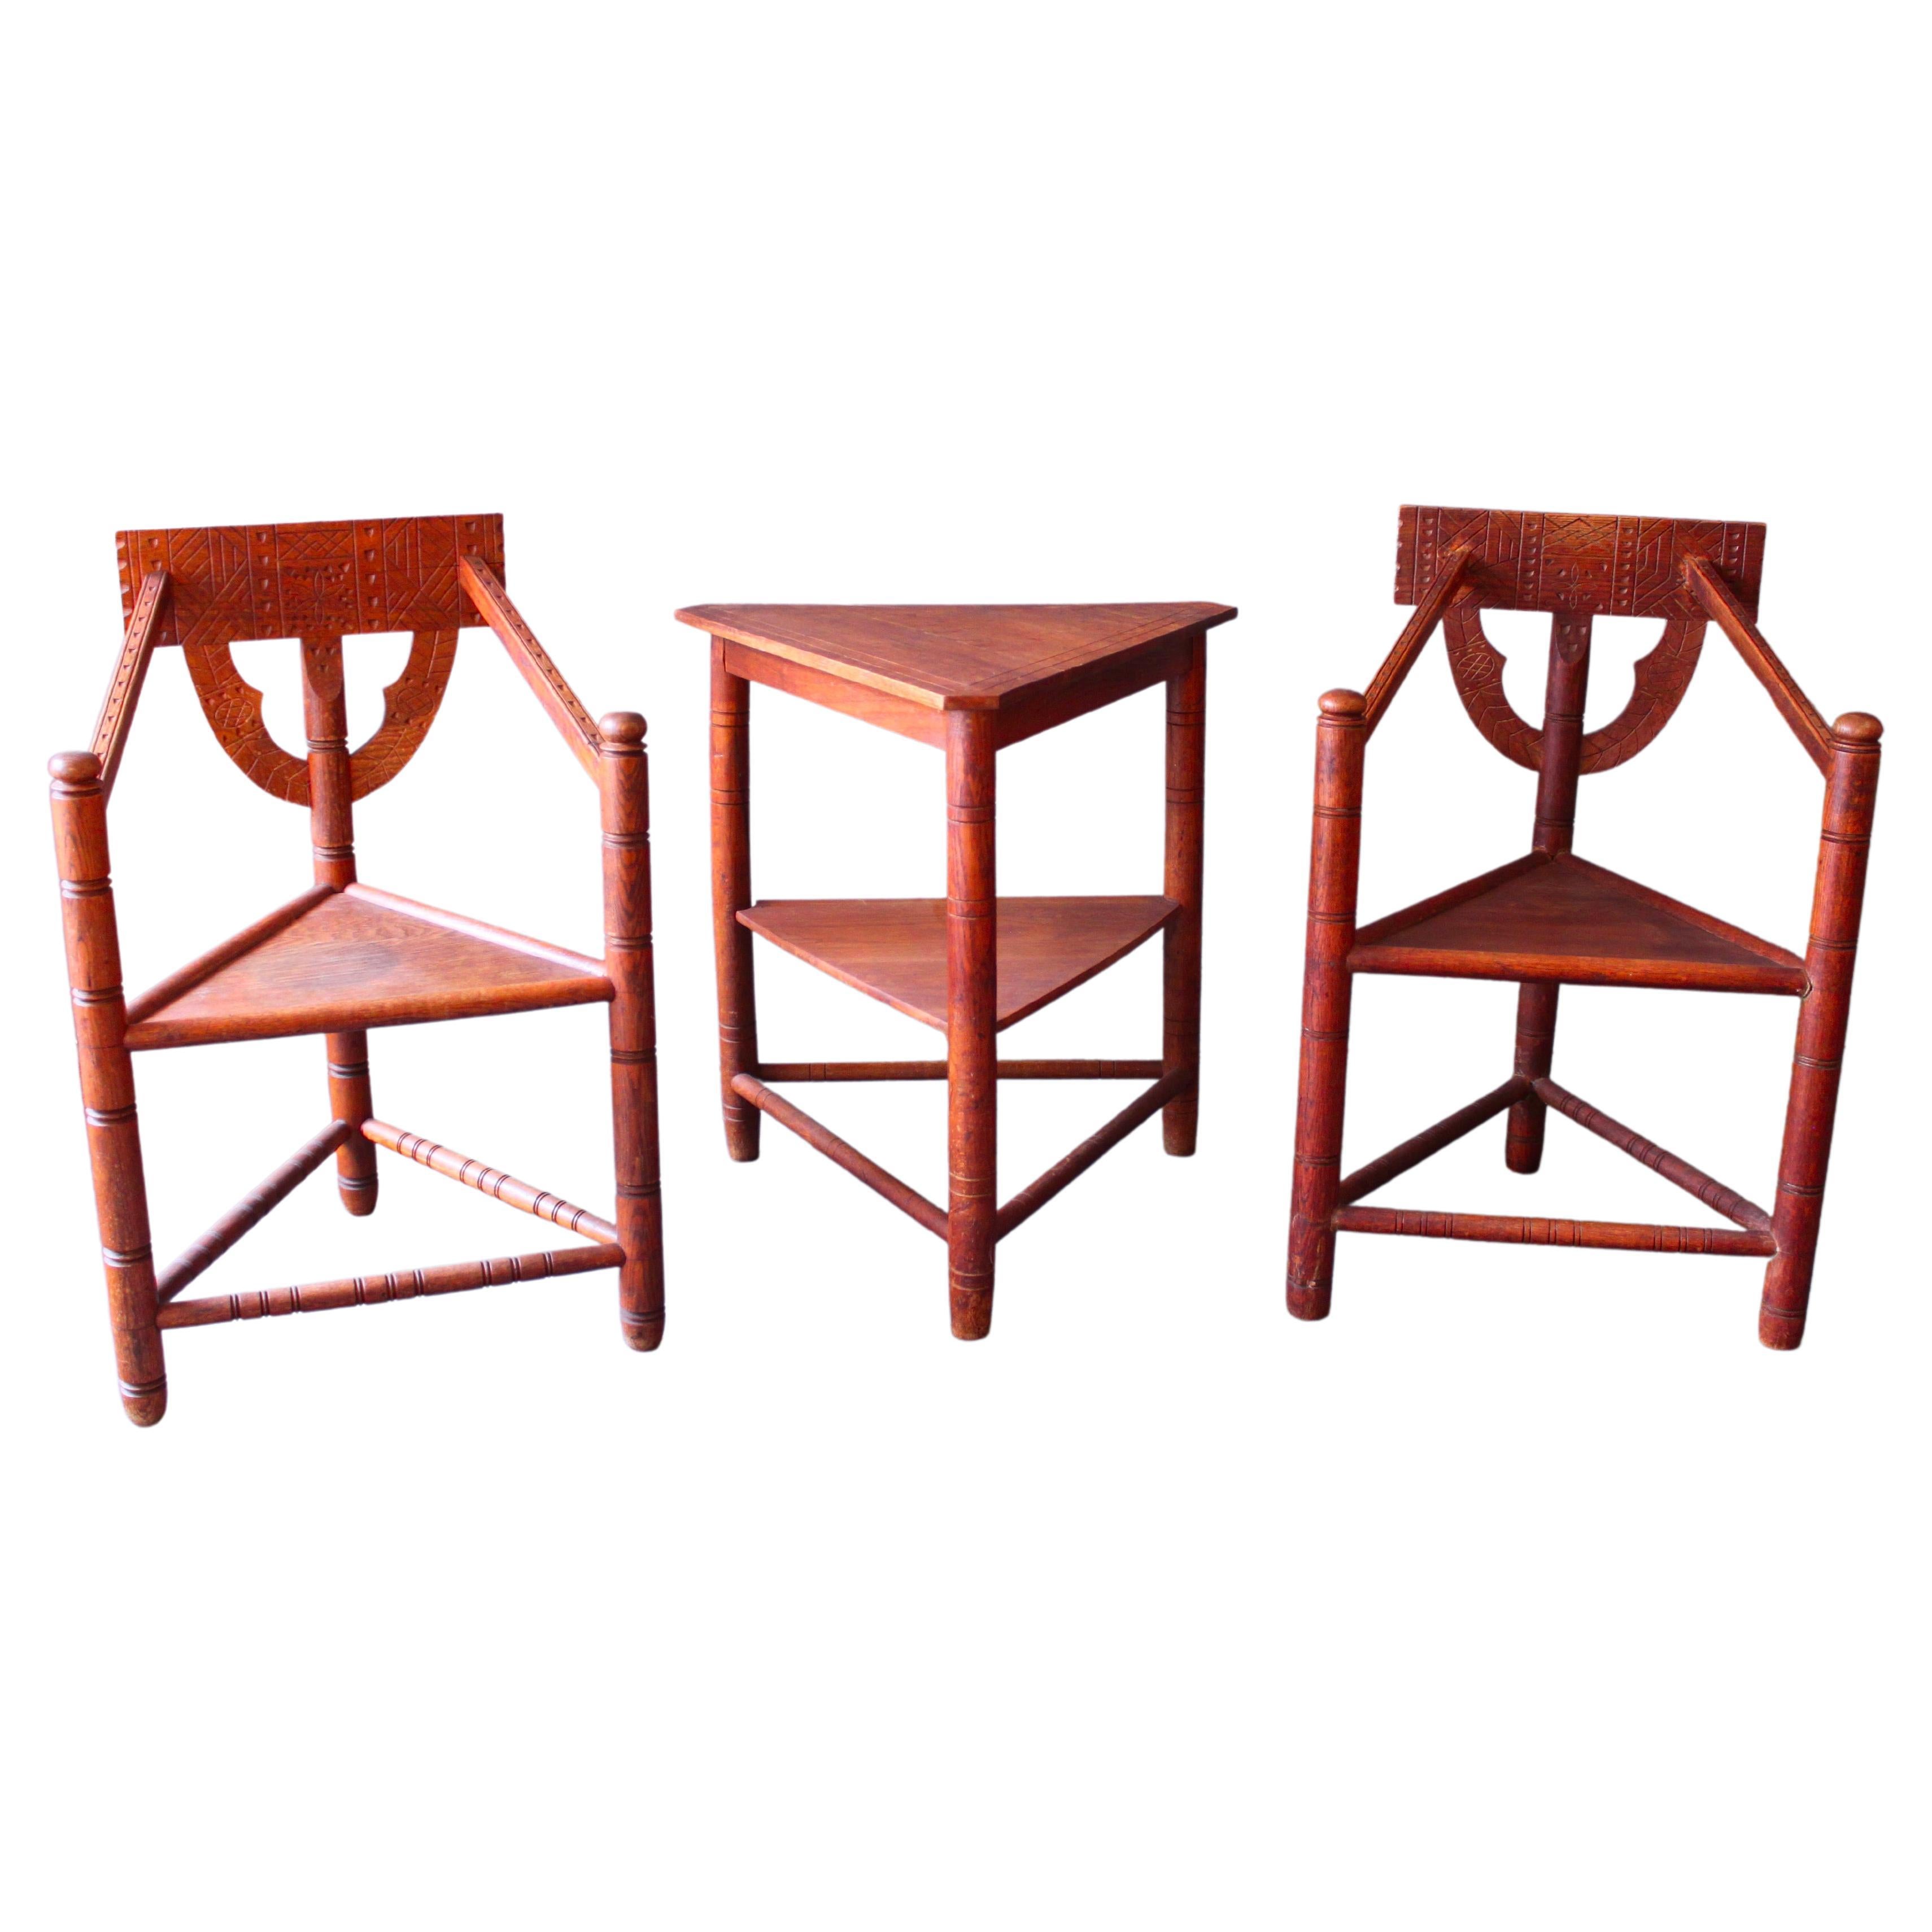 2 Chairs and Side Table by Bernhard Hoetger for Fischerhuder Werkstätten, 1915 For Sale